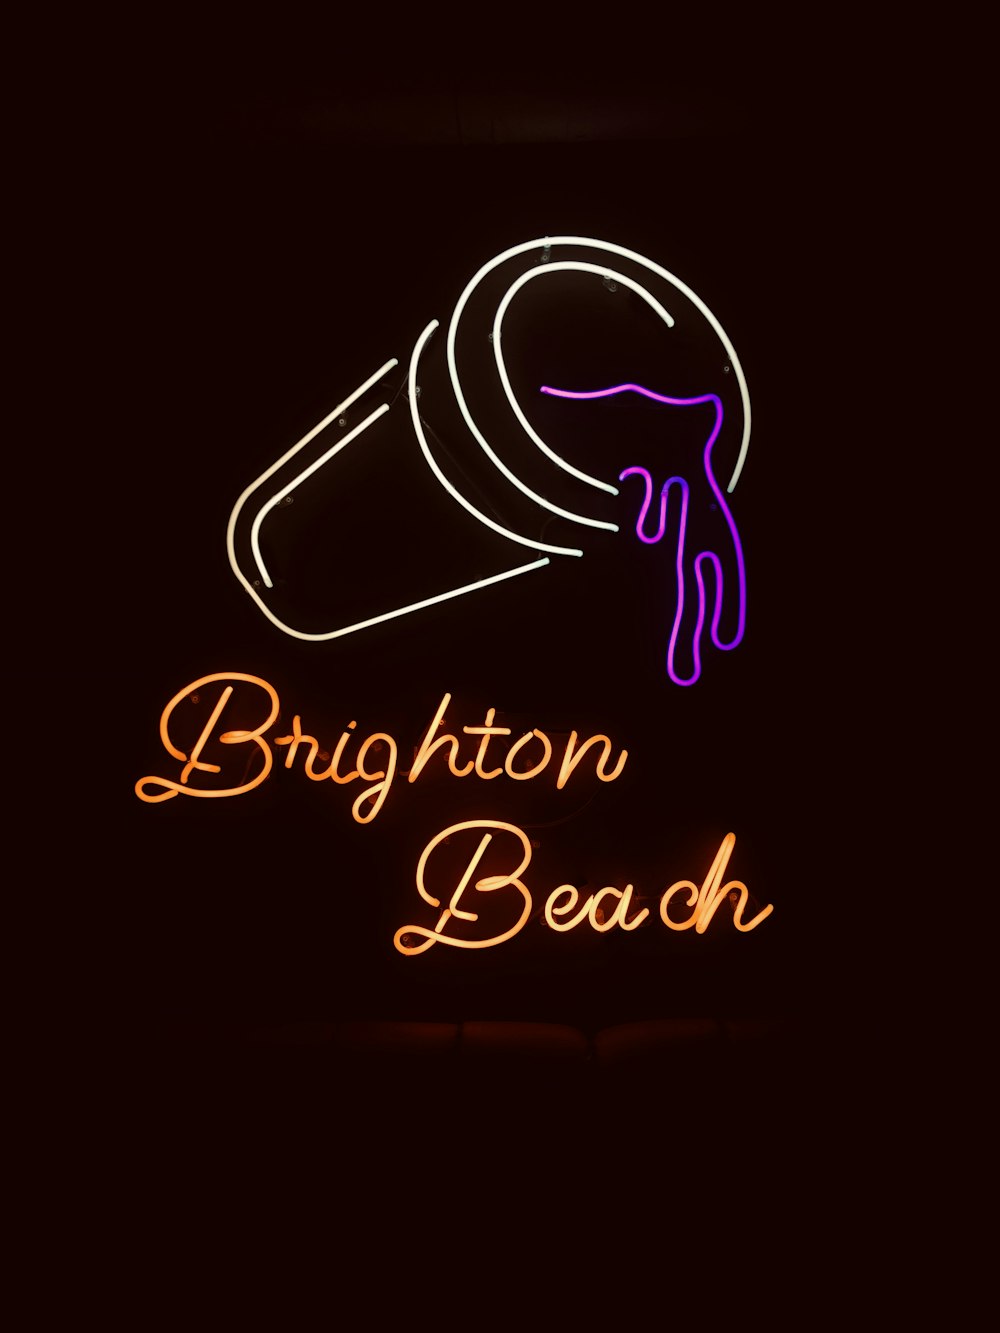 Enseignes lumineuses Brighton Beach